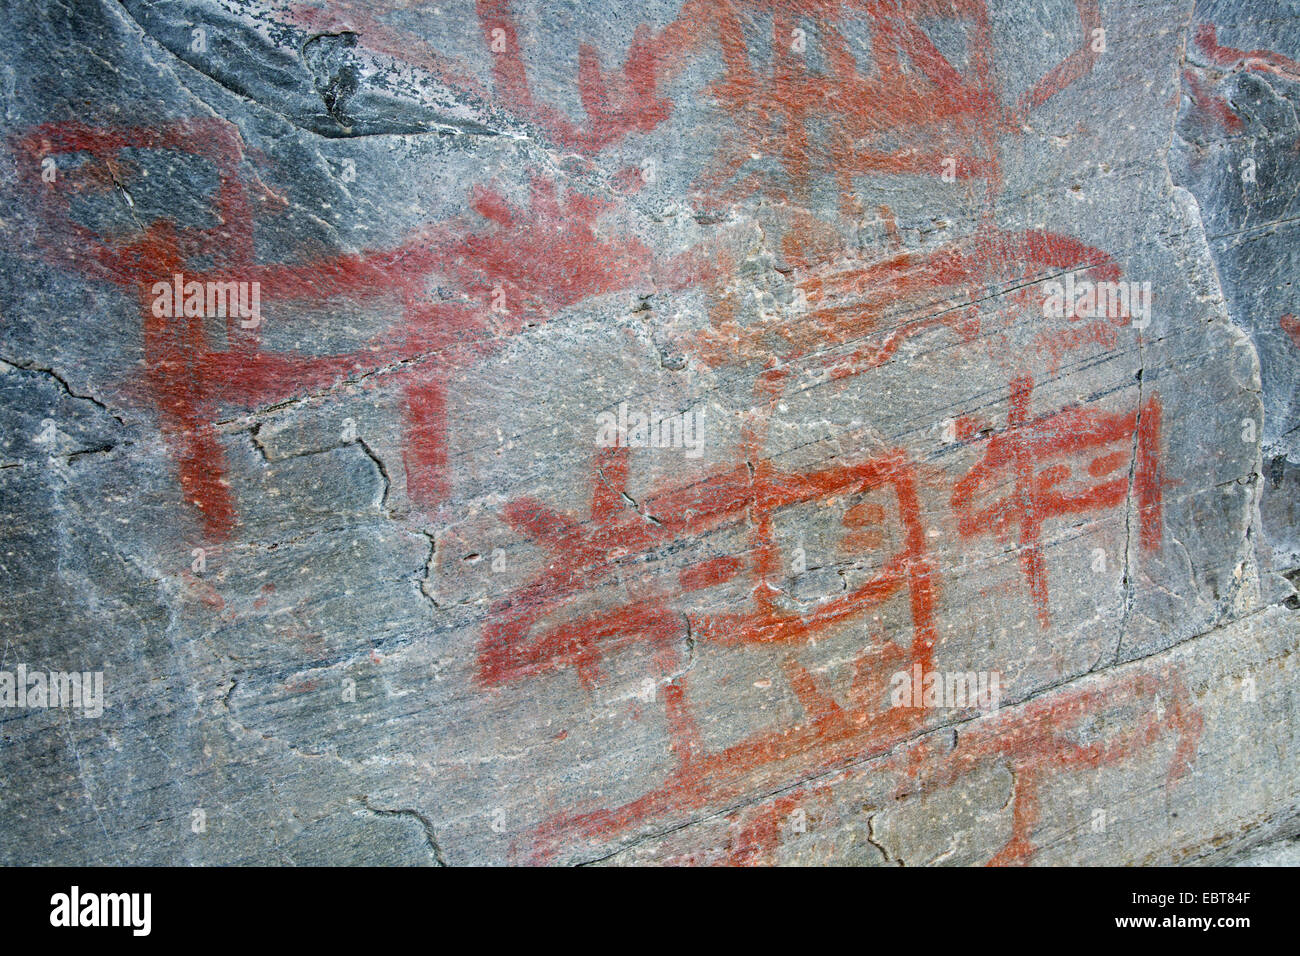 Pitture rupestri in Messlingen, le renne e le alci, Svezia, Flatruet Foto Stock